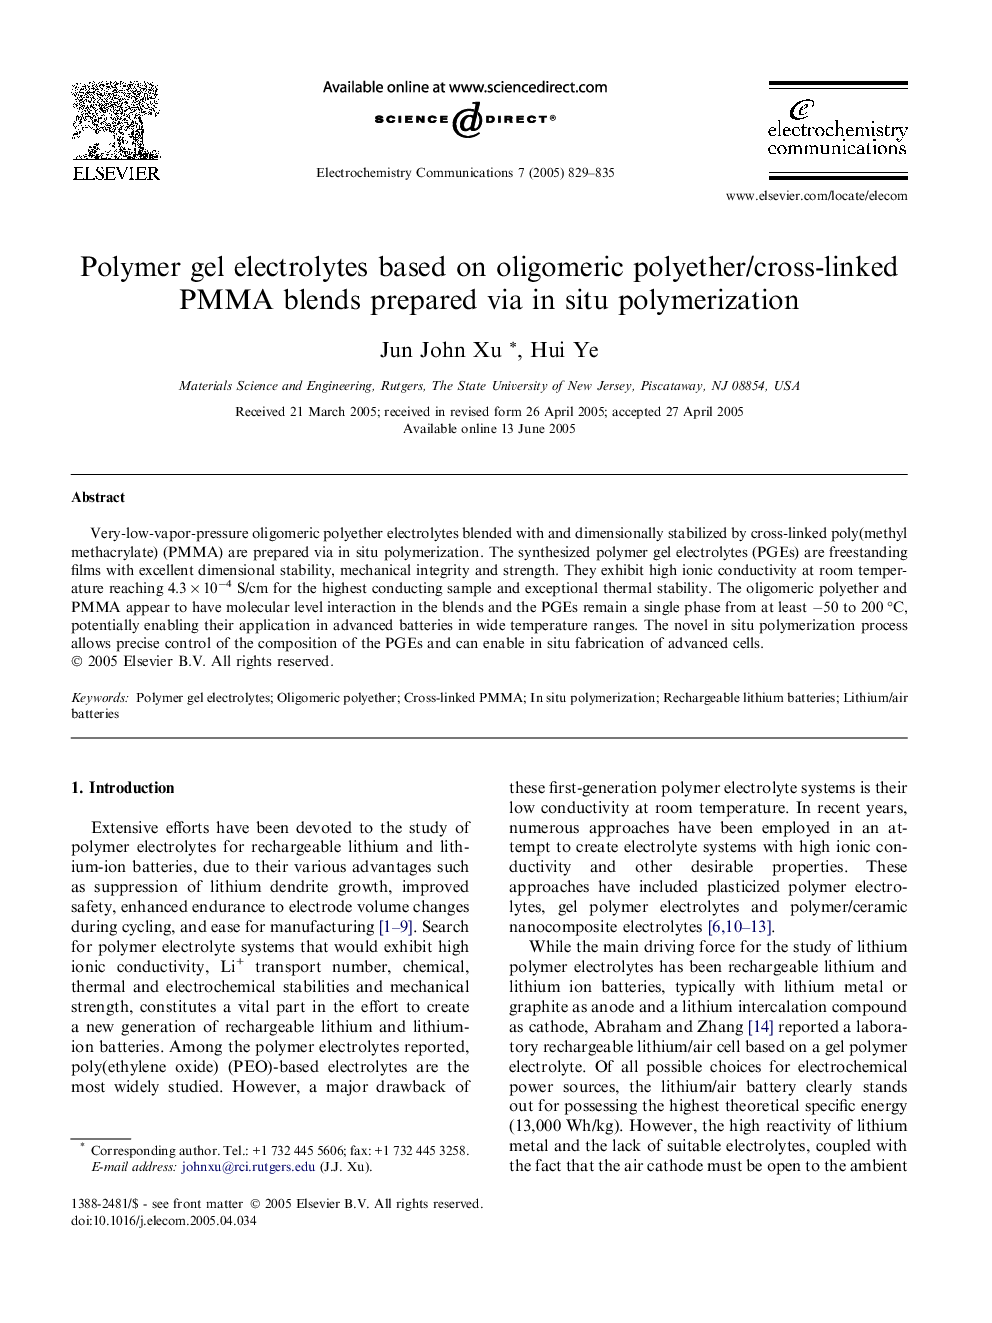 Polymer gel electrolytes based on oligomeric polyether/cross-linked PMMA blends prepared via in situ polymerization